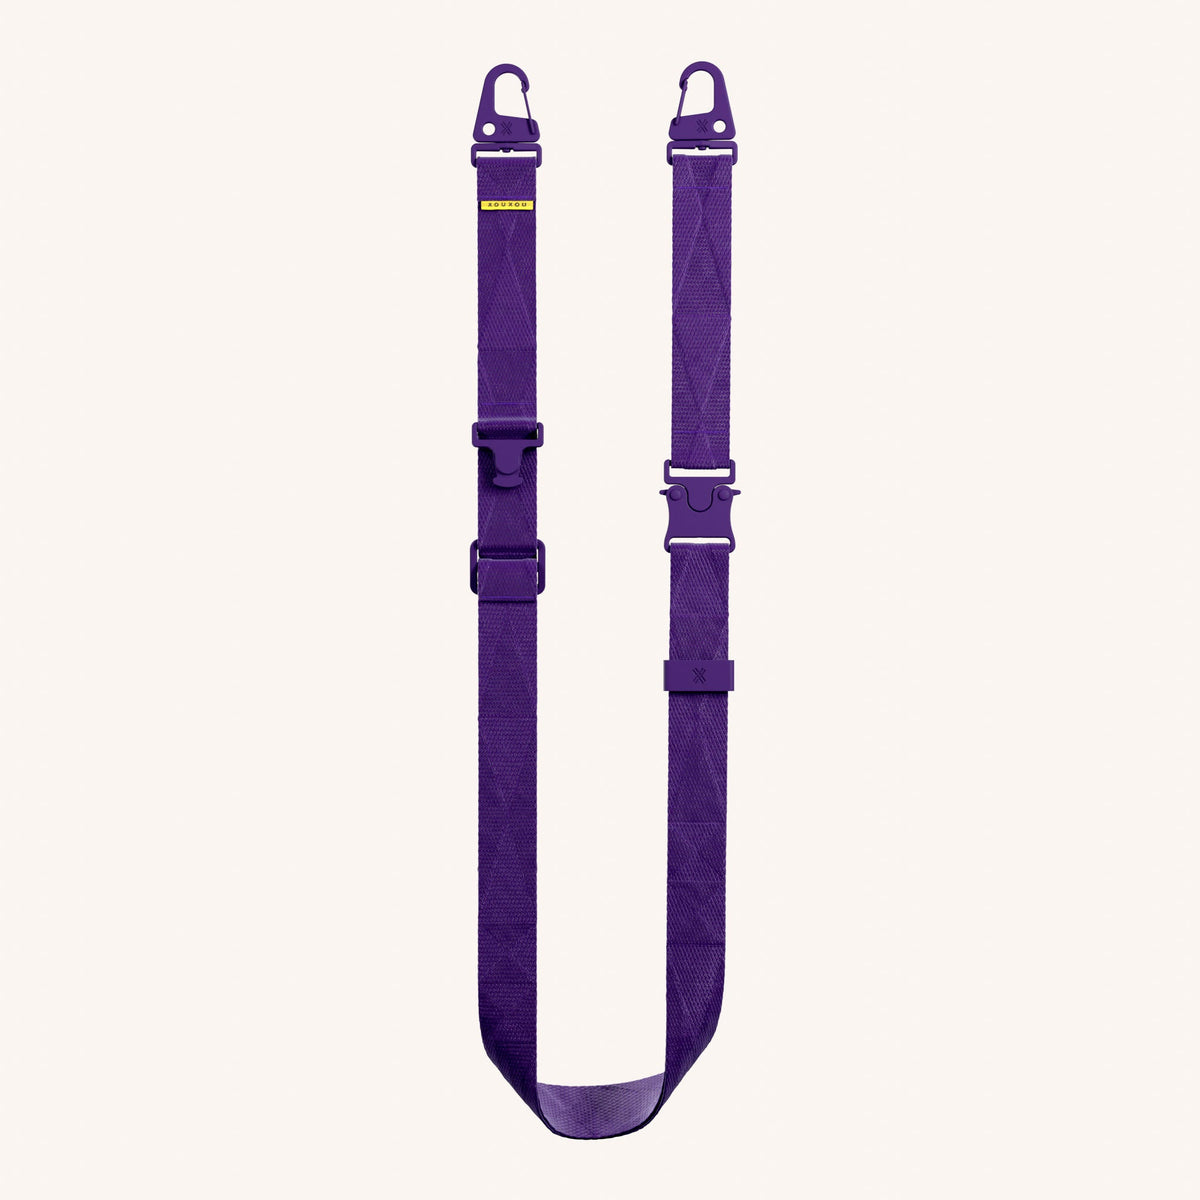 Phone Strap Lanyard in Purple Total View | XOUXOU